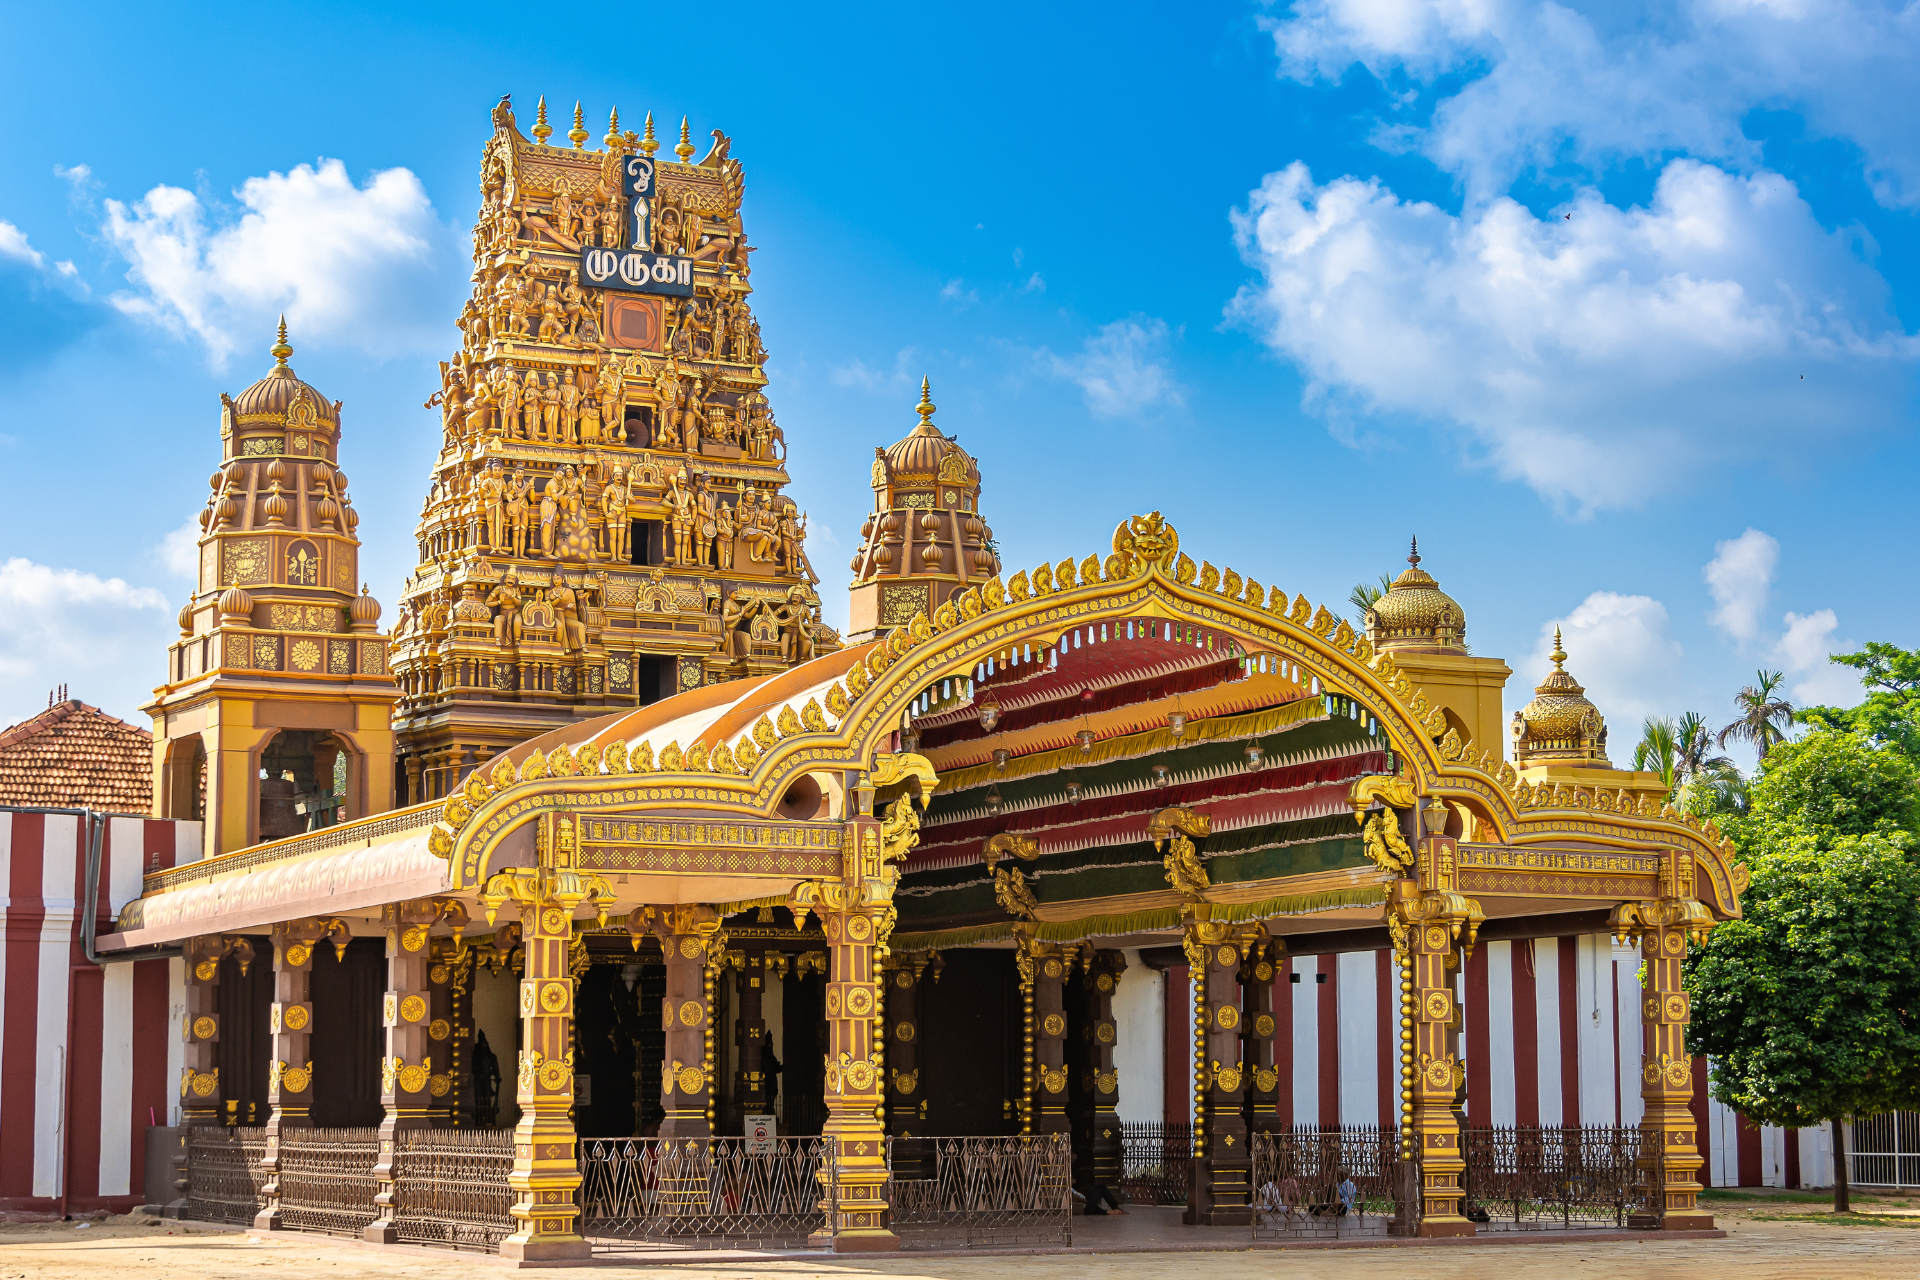 The Nallur Kandaswamy temple in Jaffna, Sri Lanka